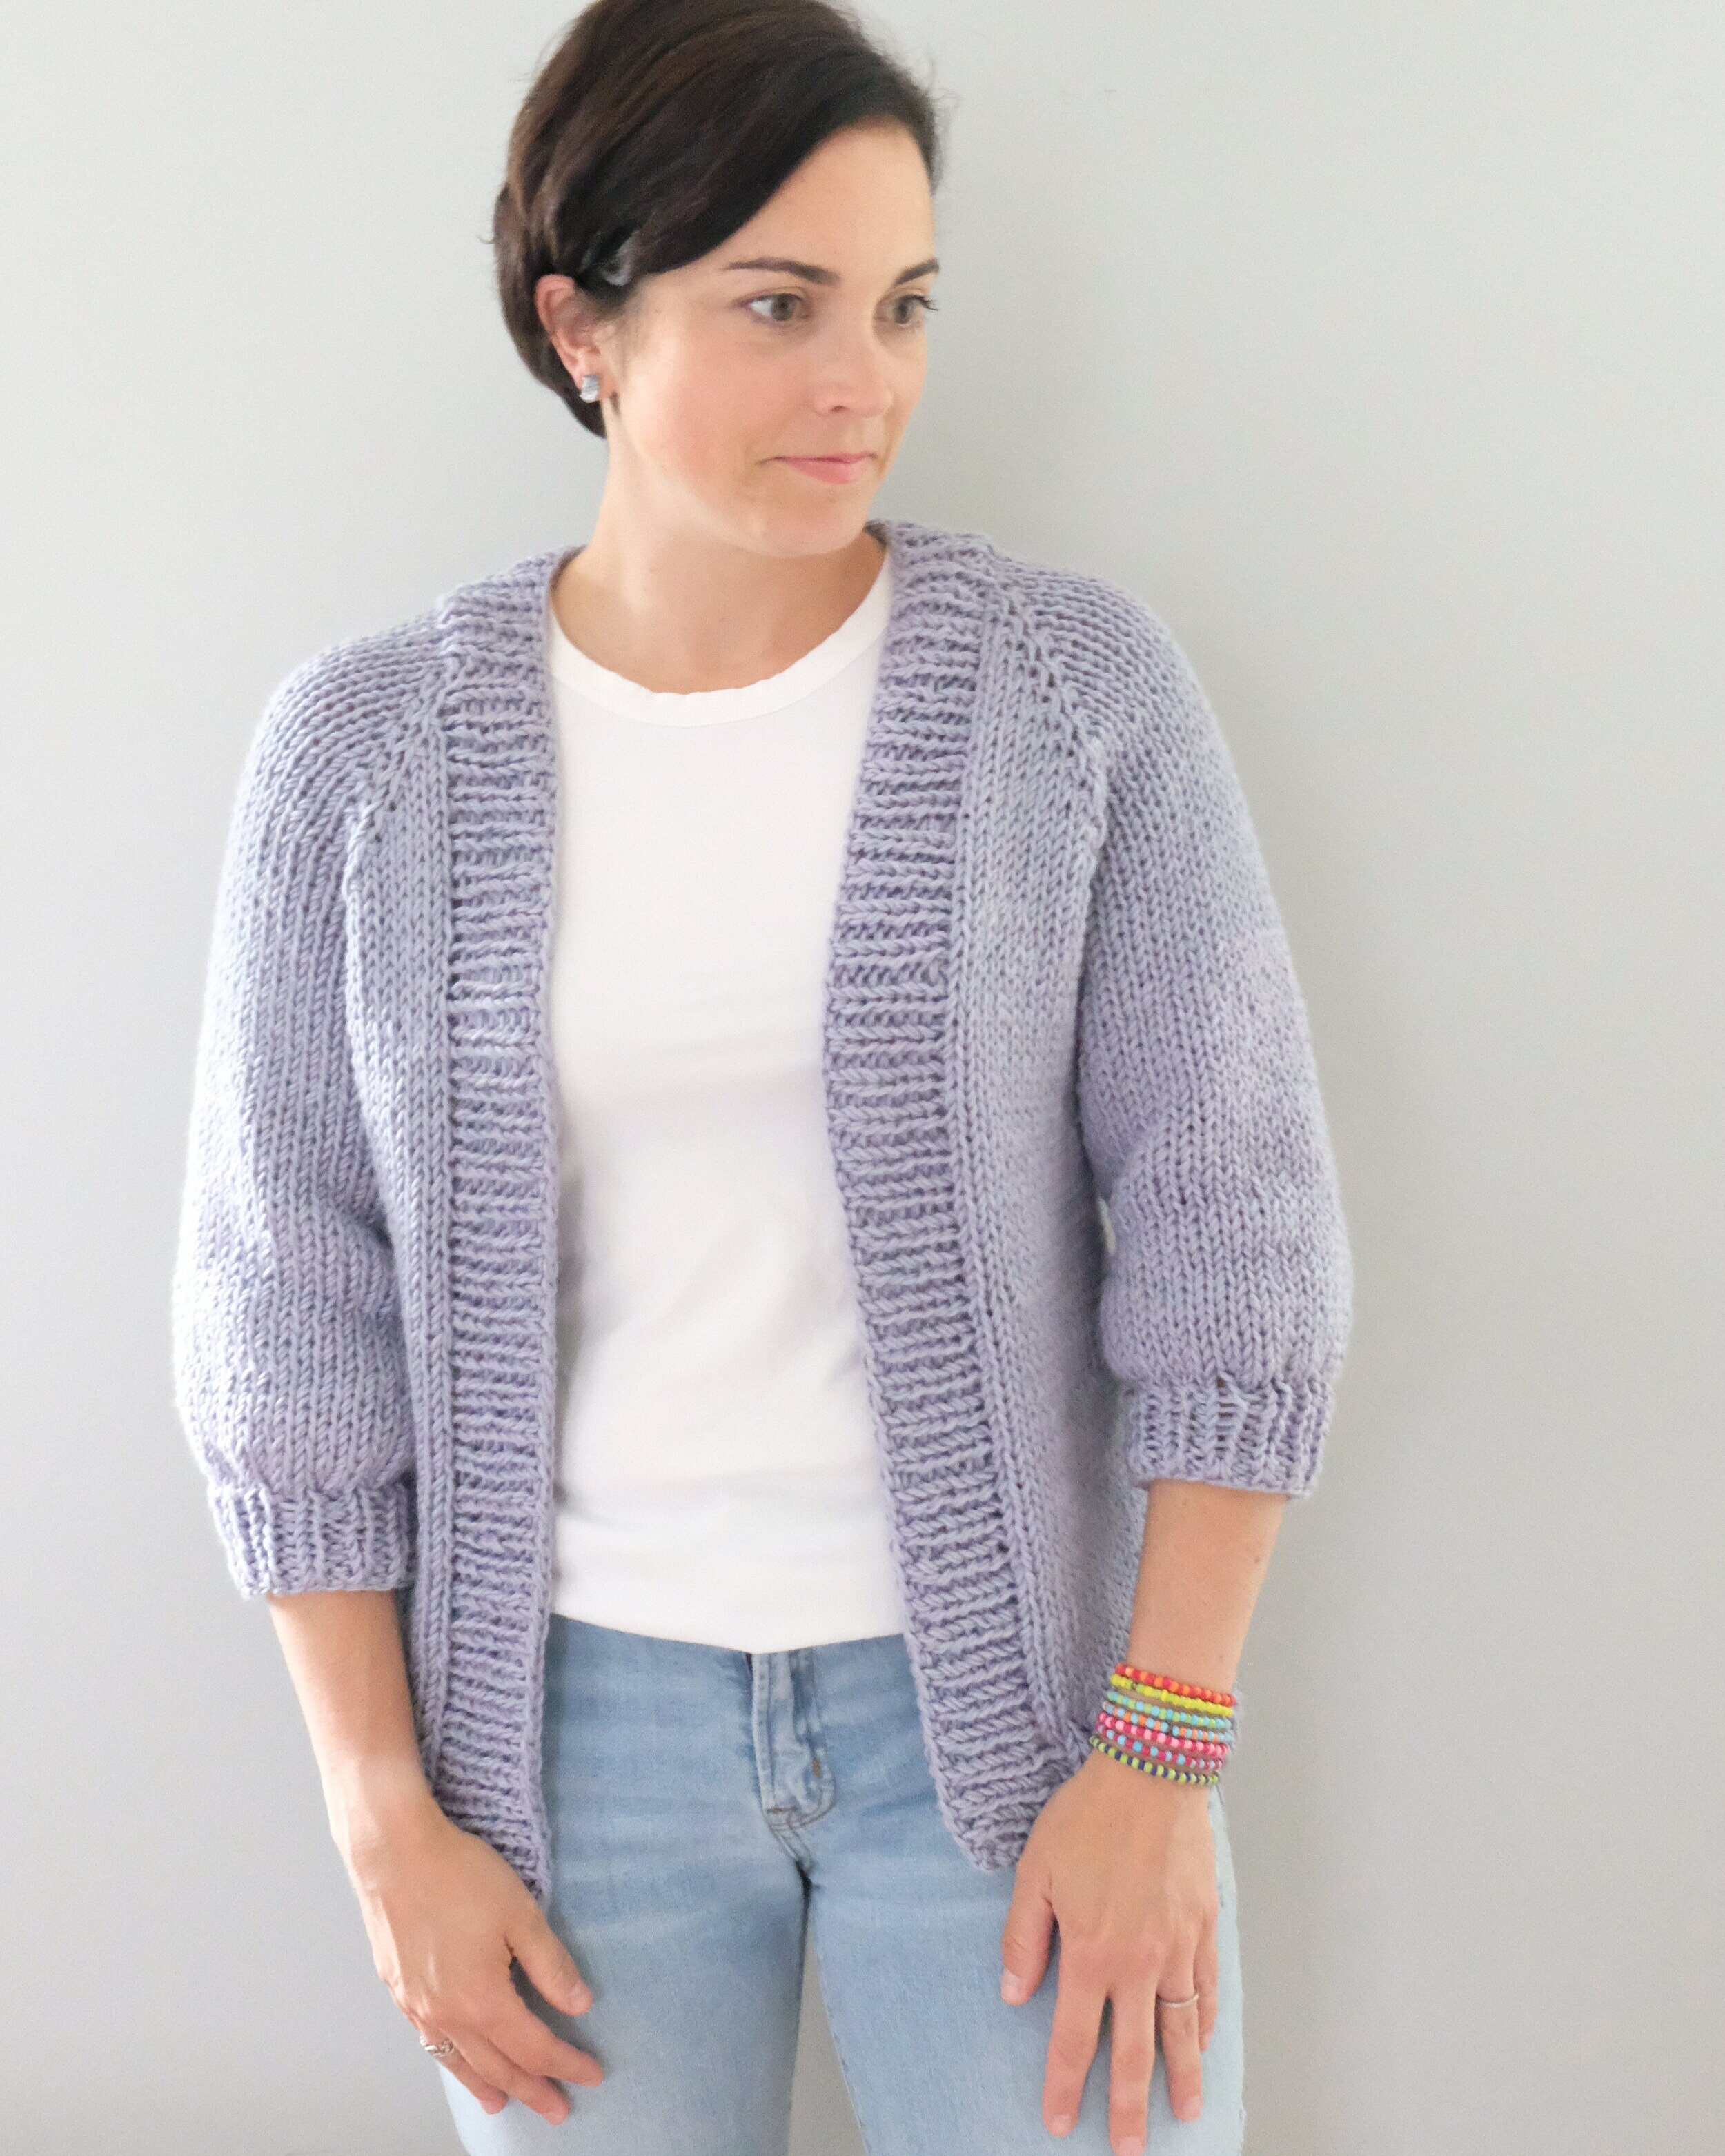 Shores Cardigan Free Knitting Pattern — Ashley Lillis